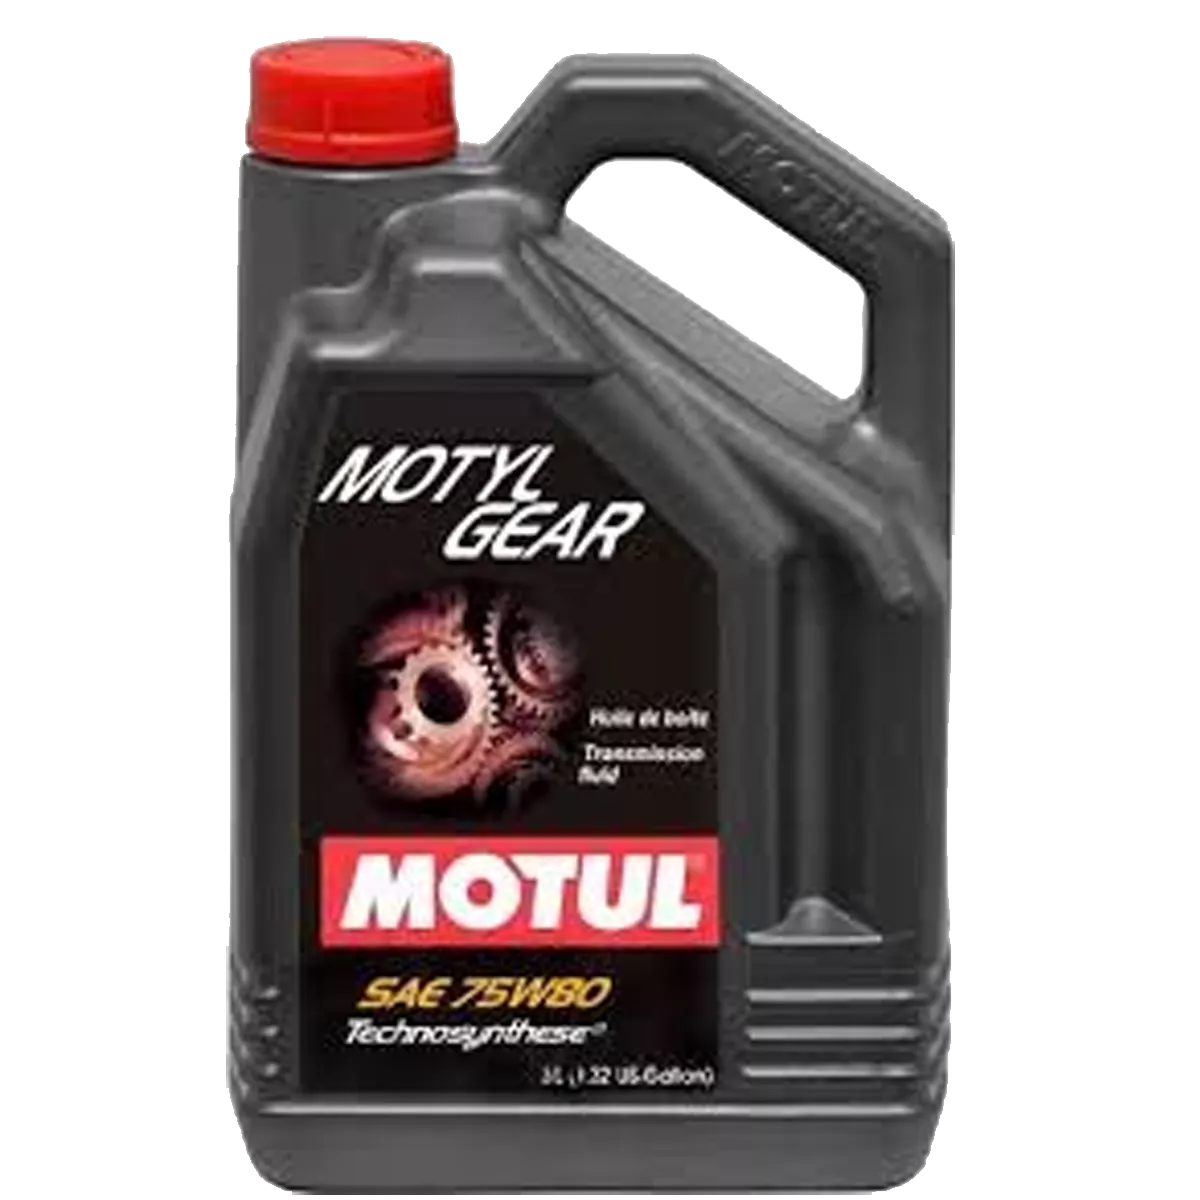 MOTUL Motylgear SAE 75W80 5л (823406)